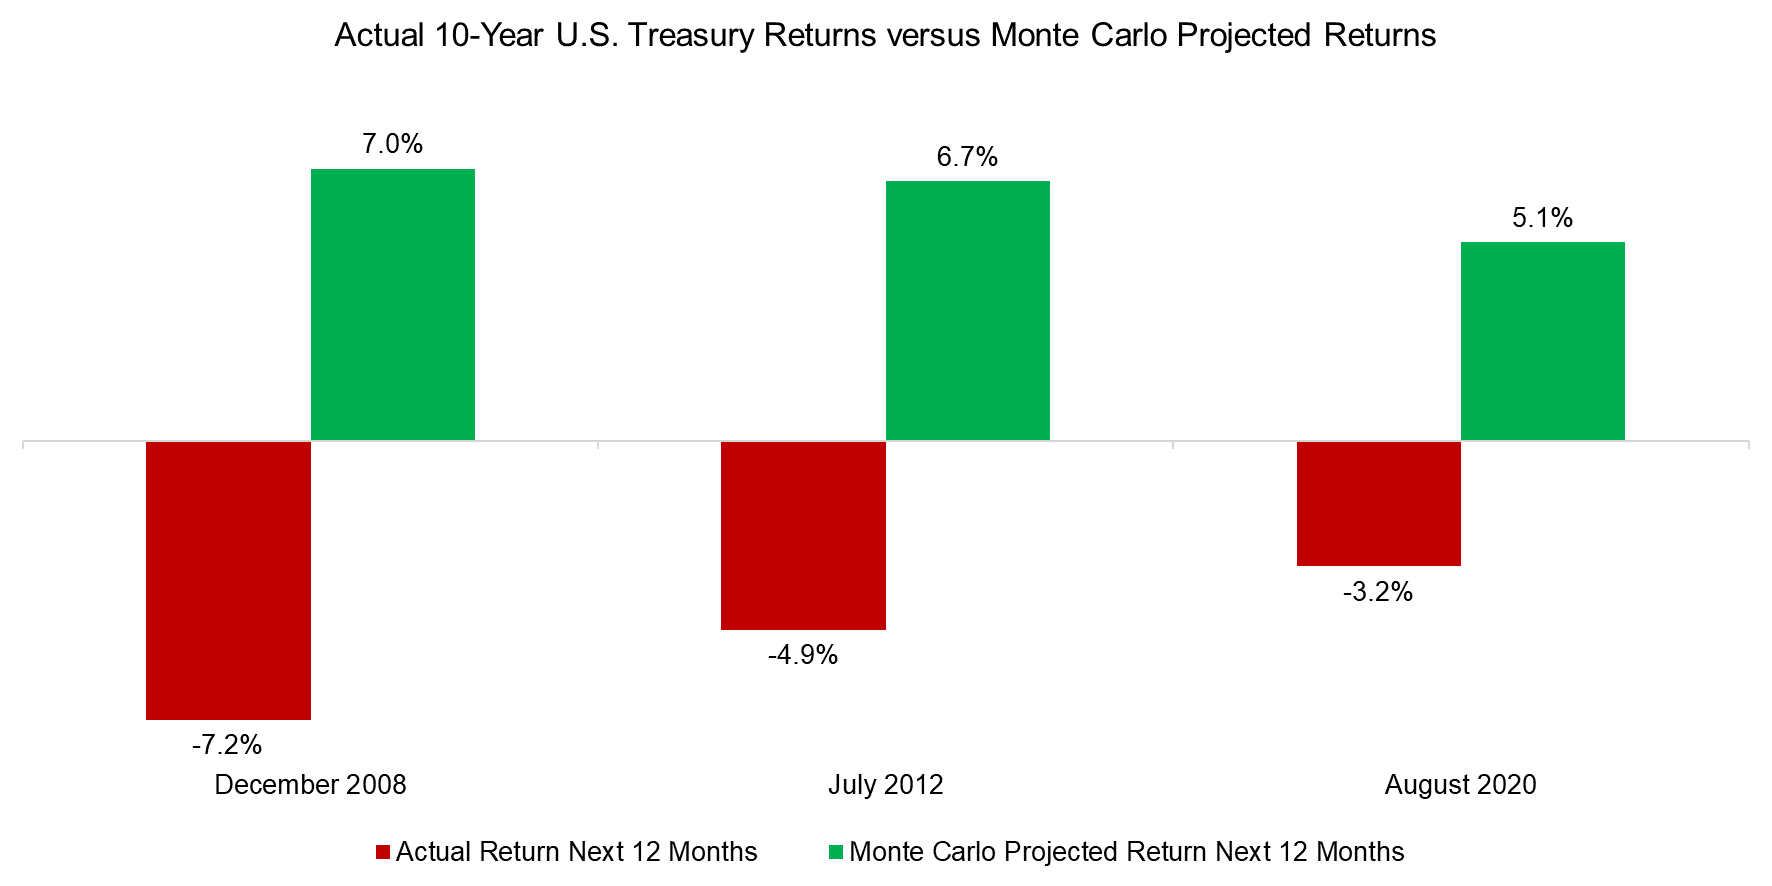 UActual 10-Year U.S. Treasury Returns versus Monte Carlo Projected Returns